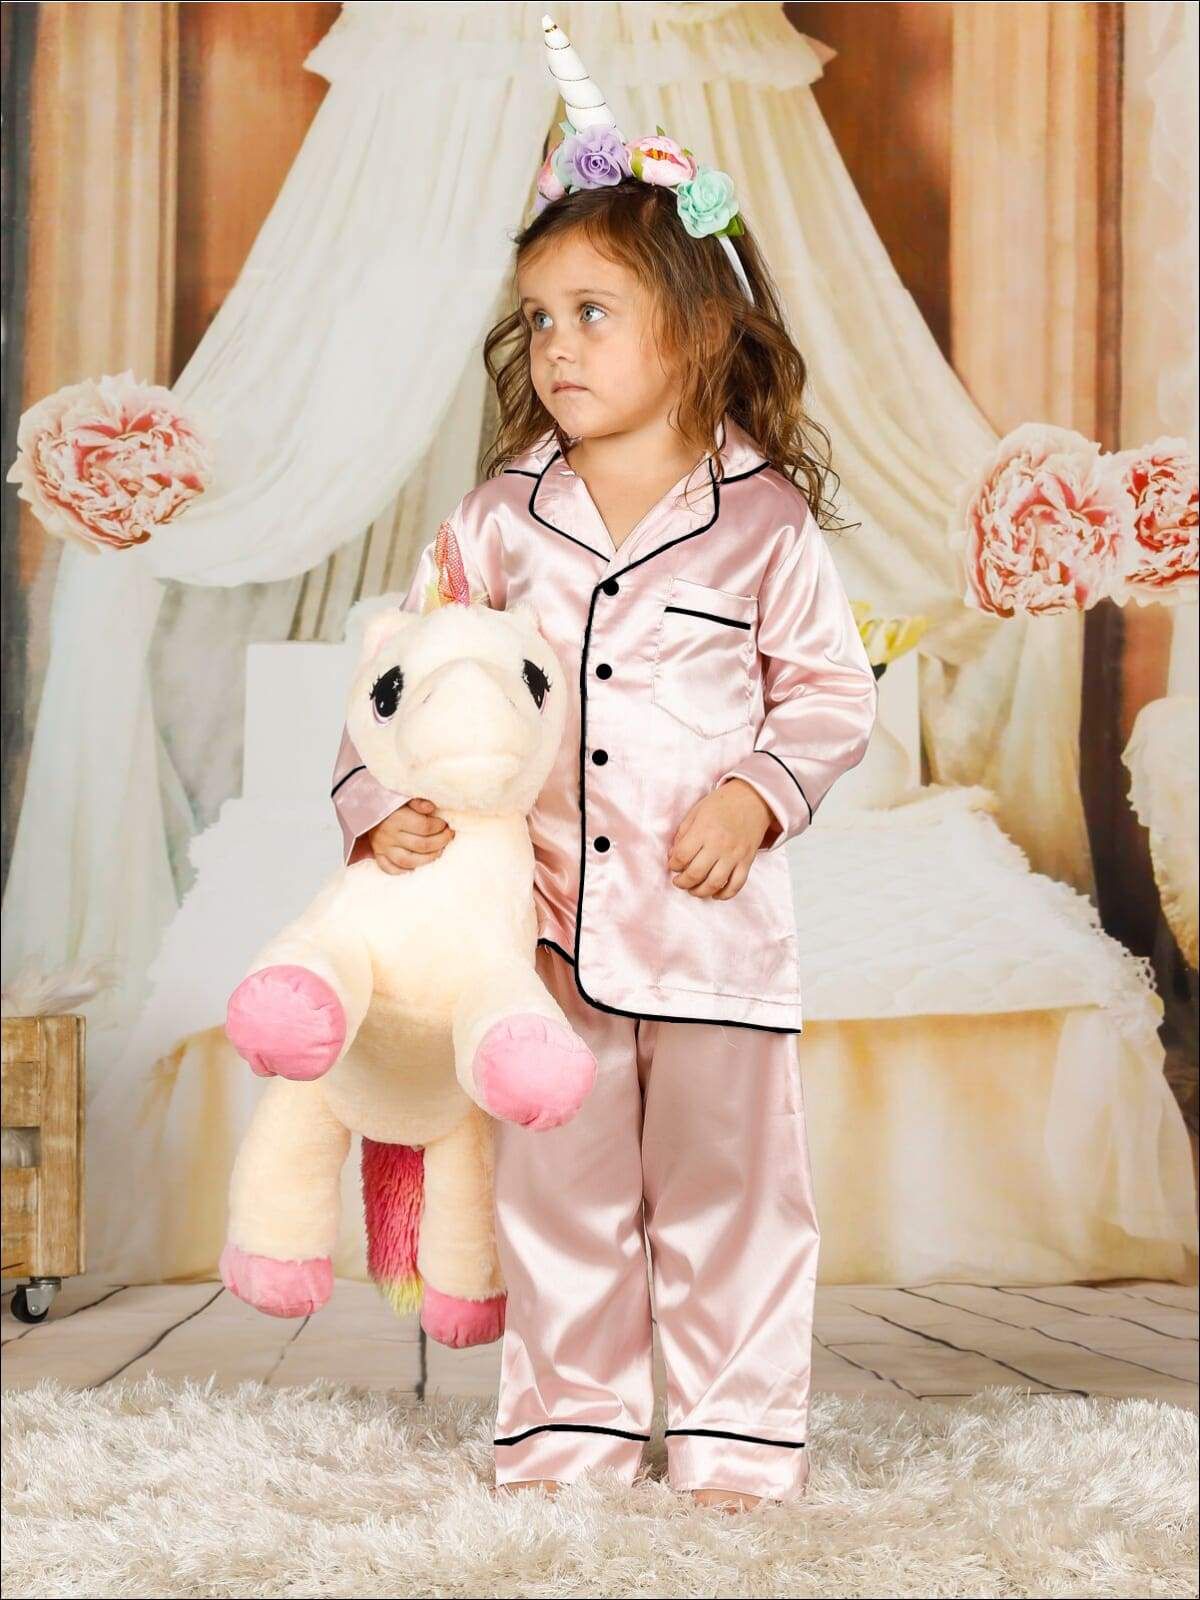 Pijama Fete, satin roz - Personalizare Broderie